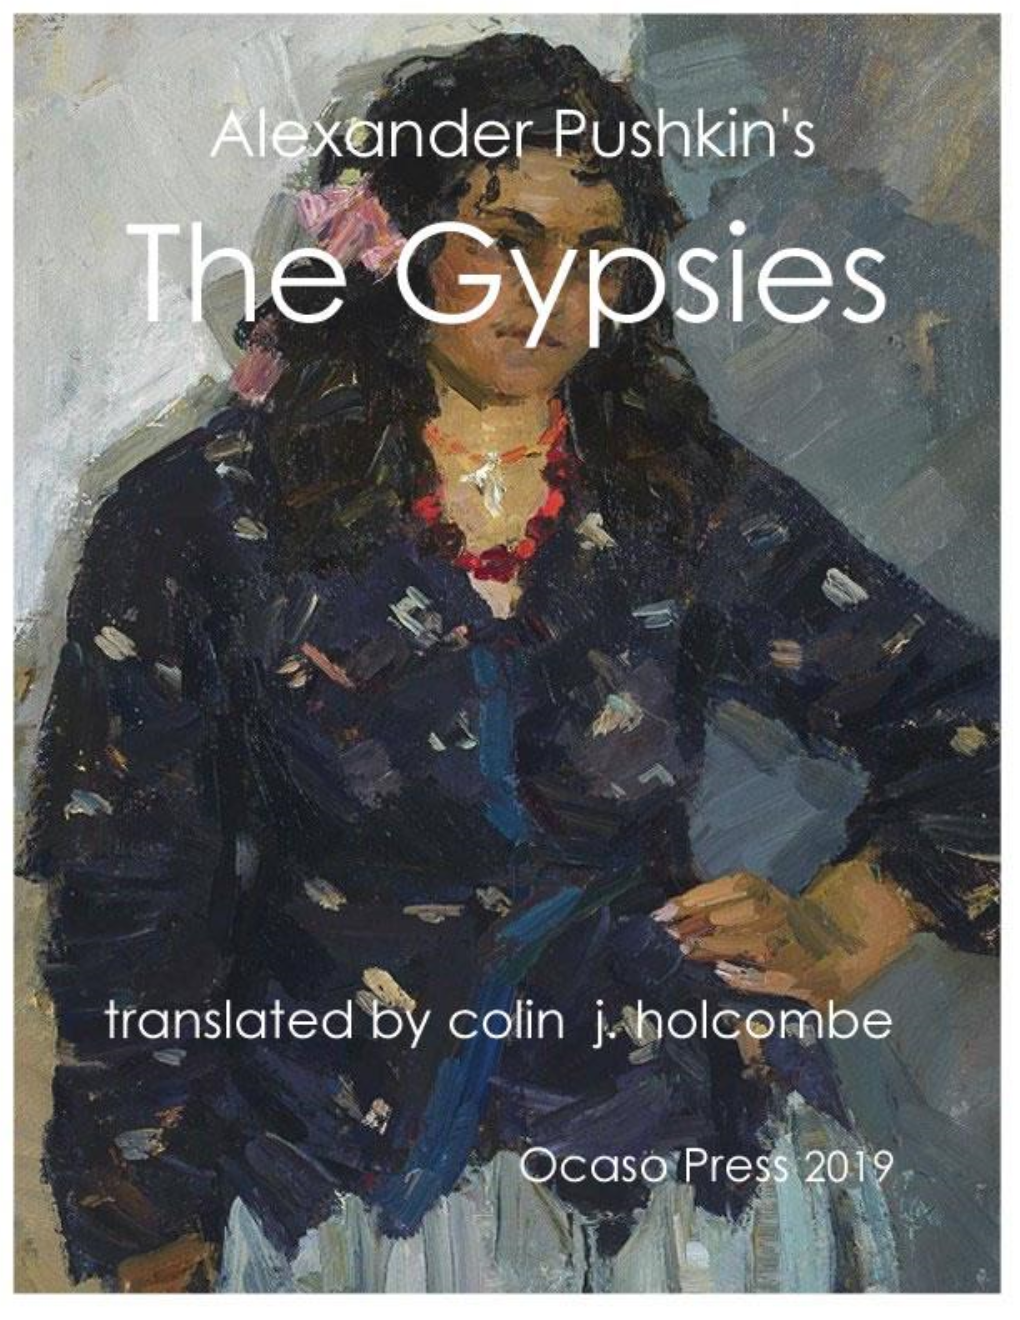 The Gypsies by Alexander Pushkin